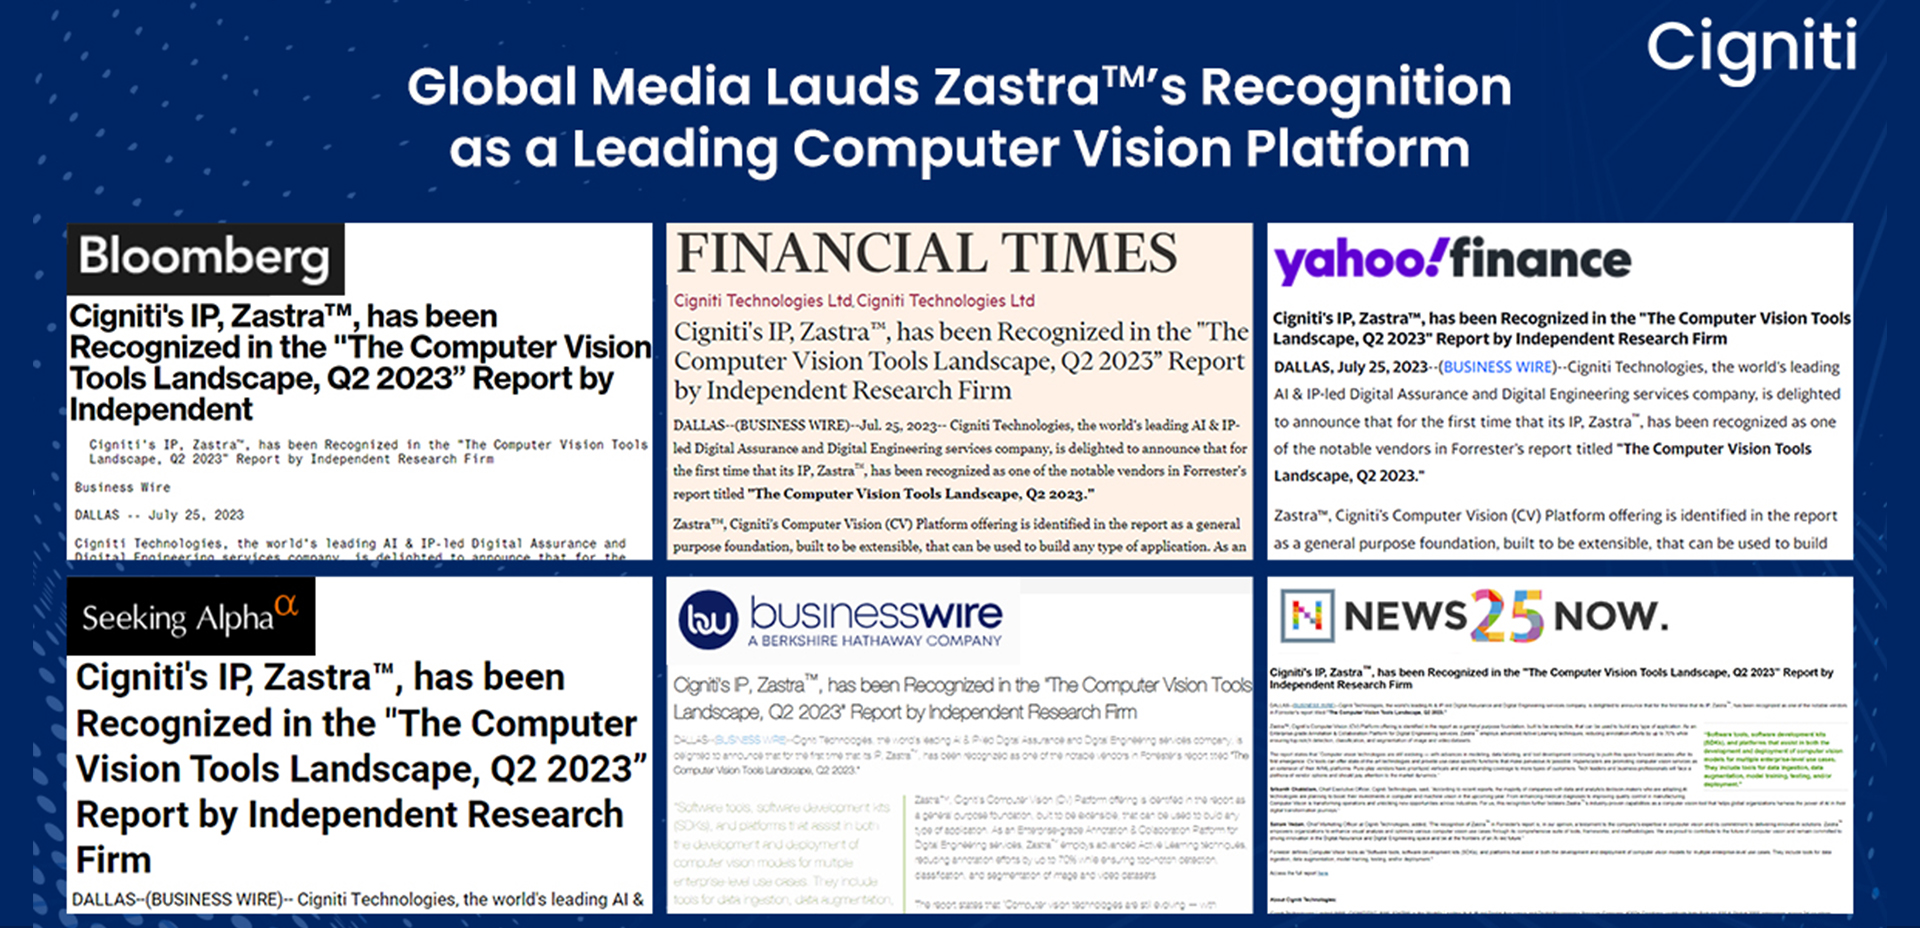 Global Media Lauds Zastra recognition as a Leading Computer Vision Platform